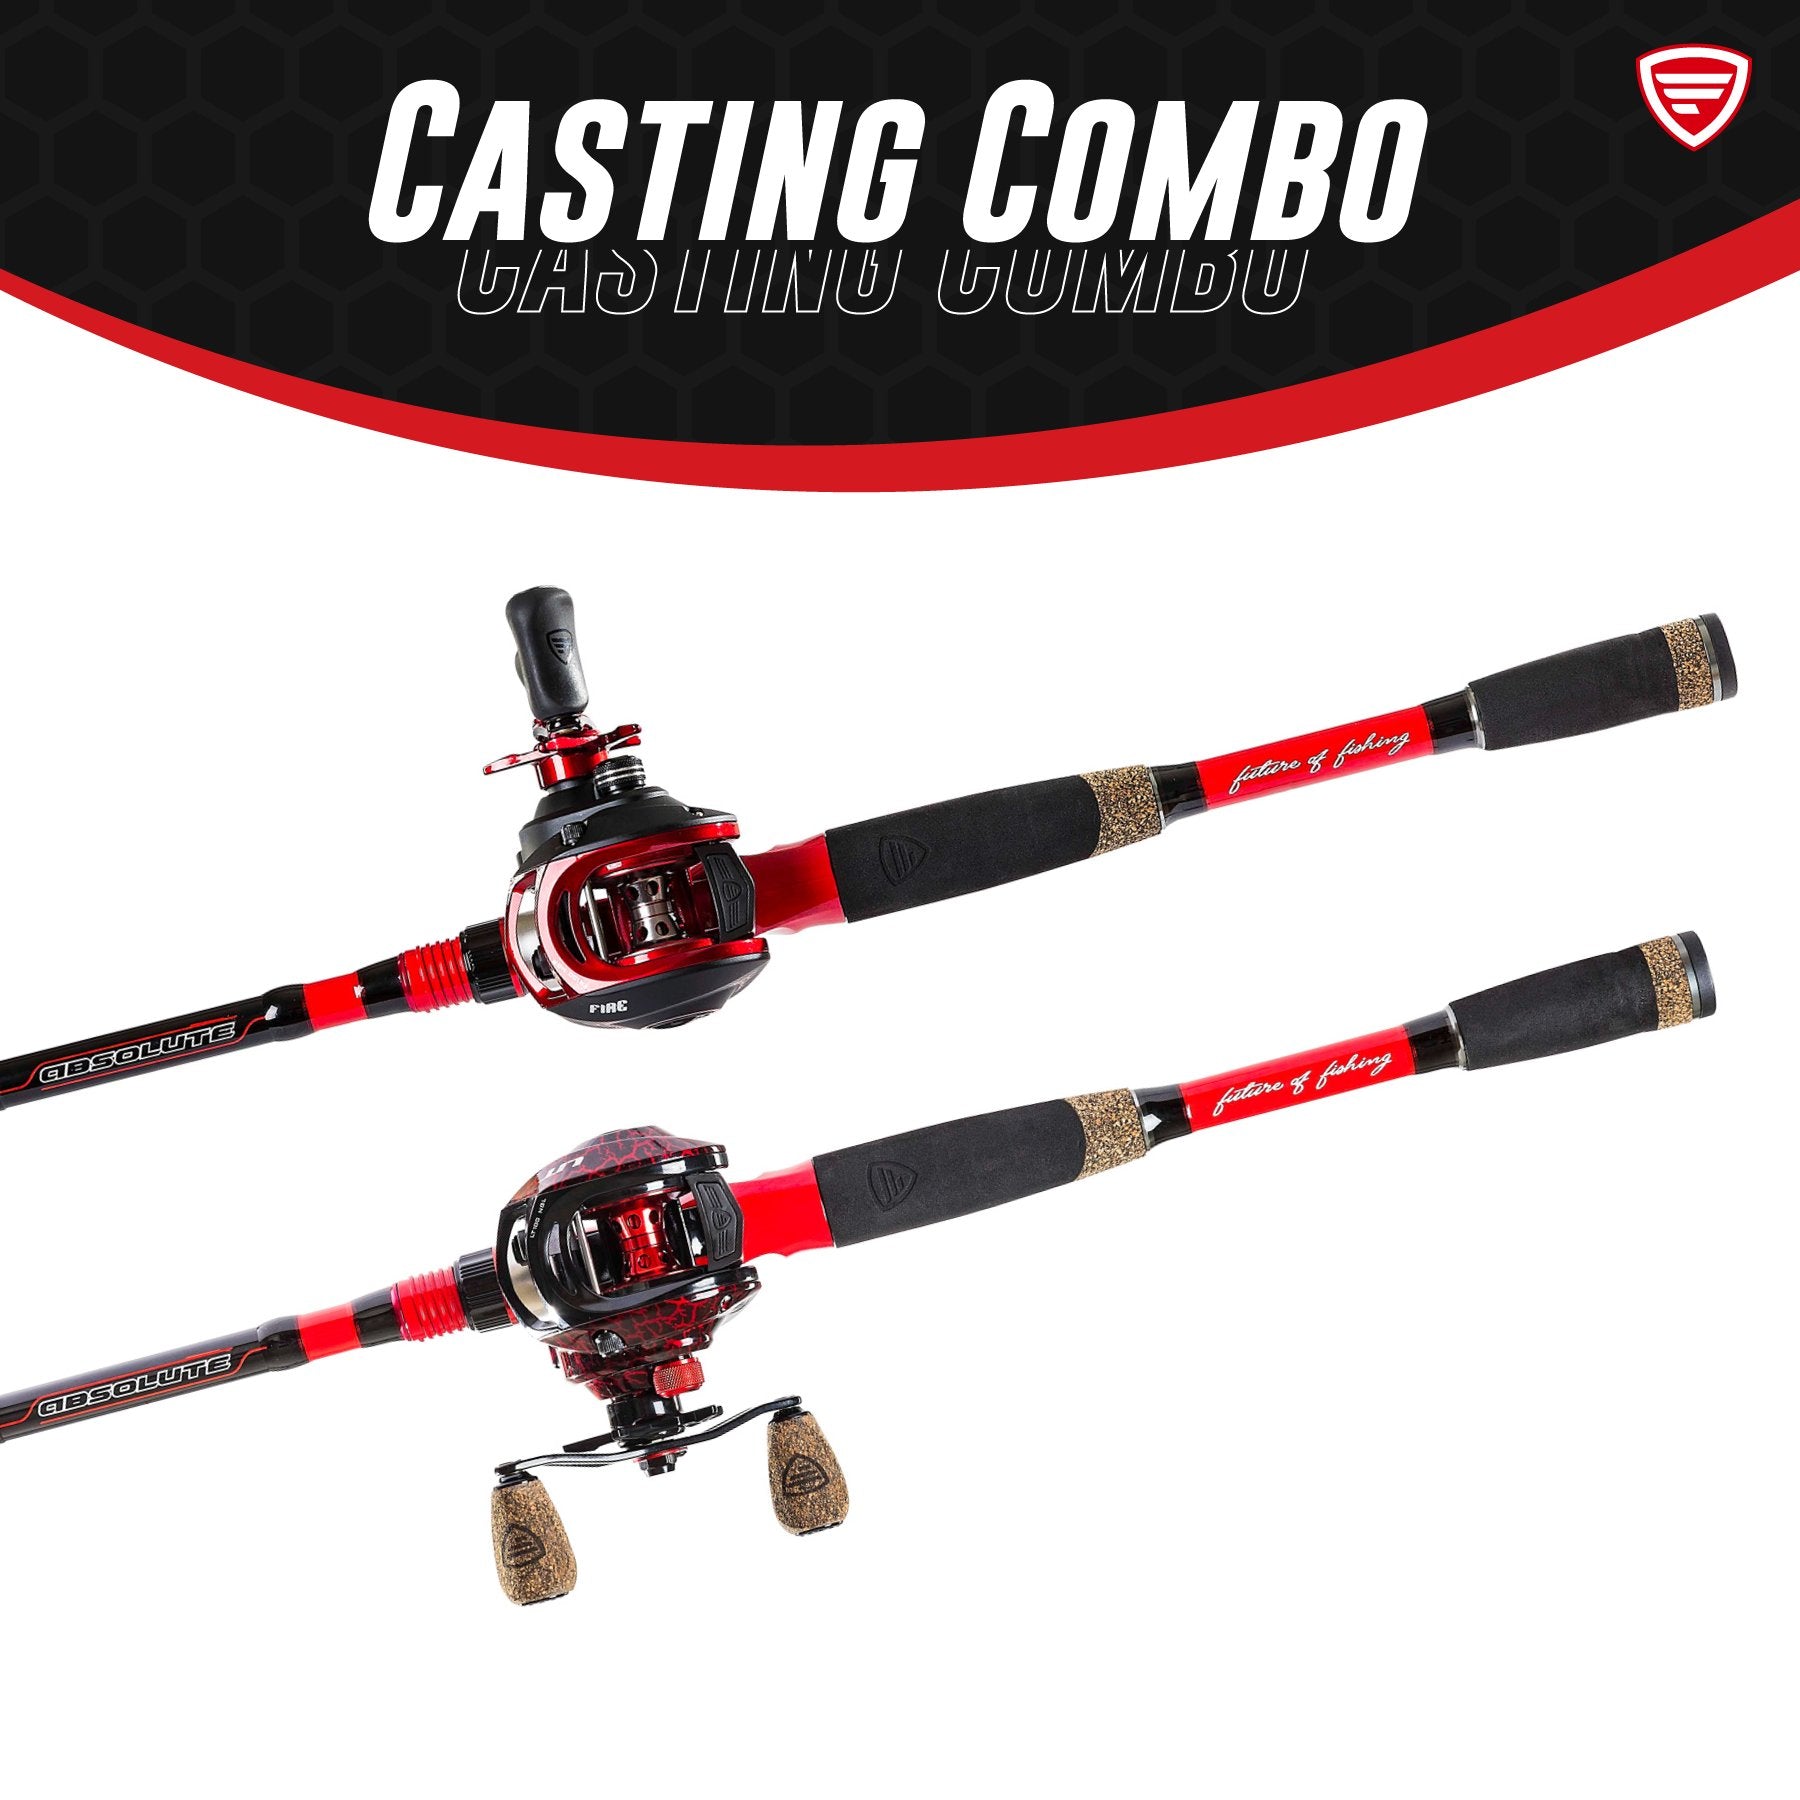 Casting Combo – Favorite Fishing